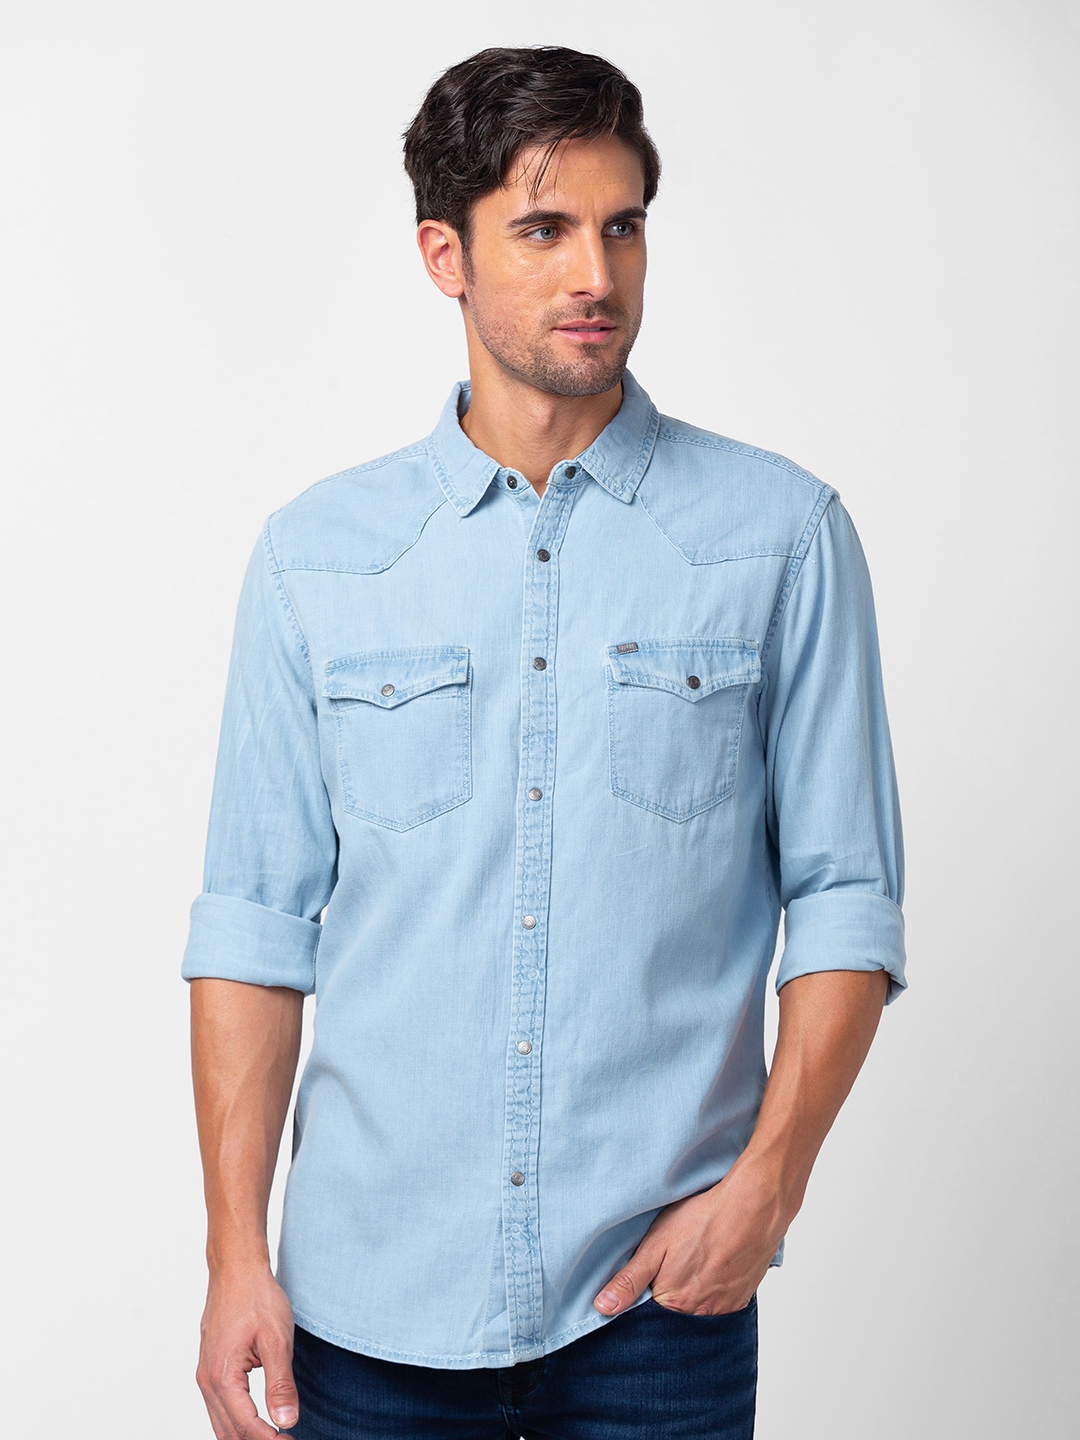 Buy Solid Blue Denim Shirt Shirt Online | Tistabene - Tistabene